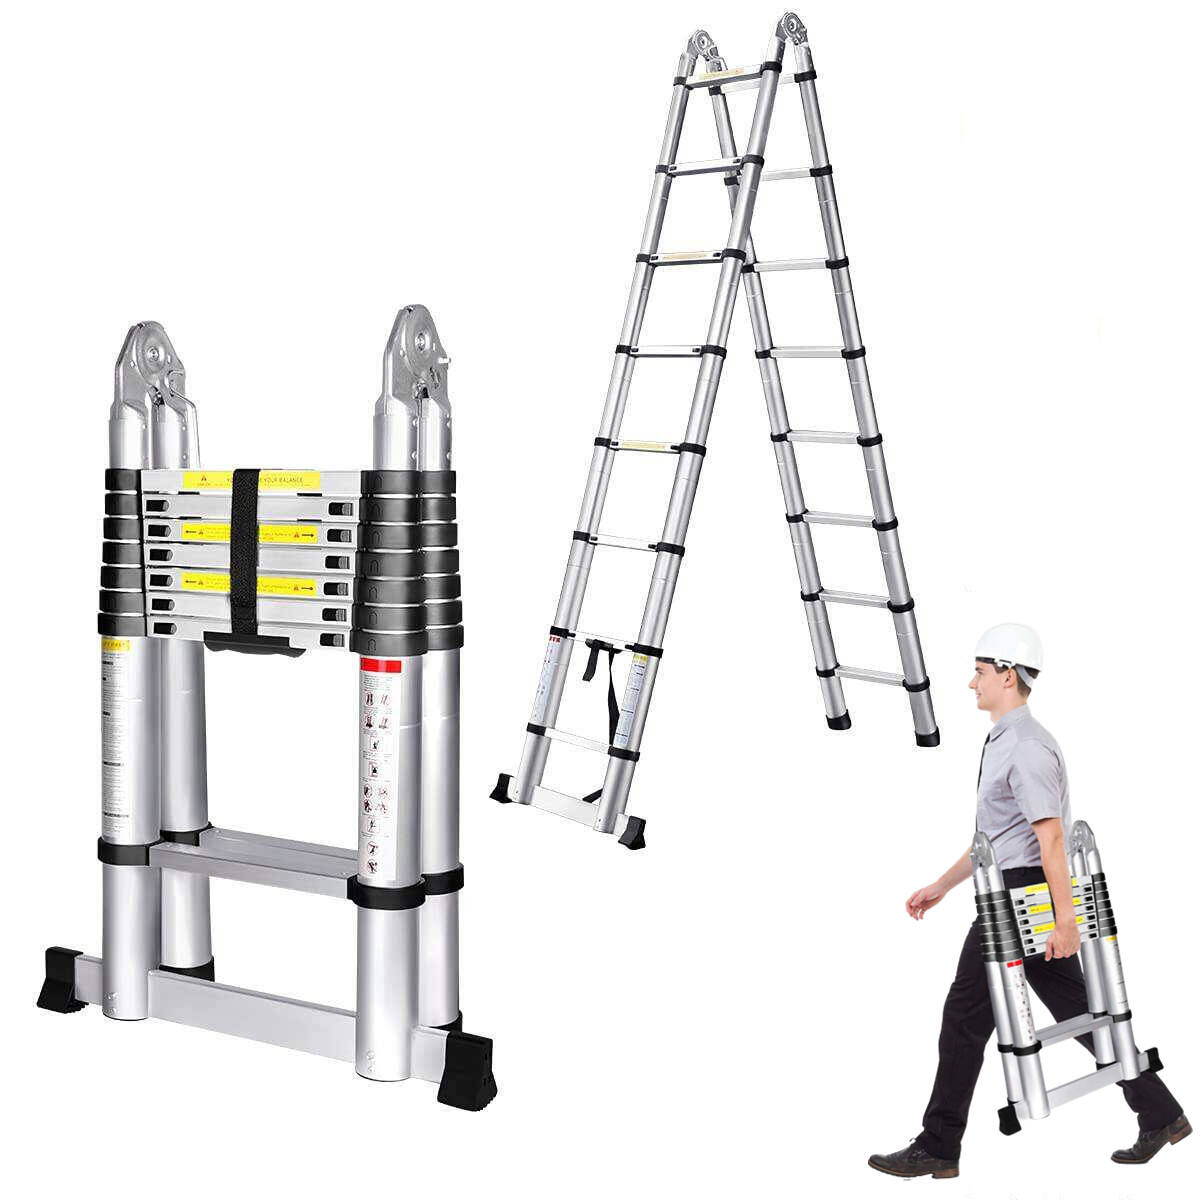 Folding telescopic ladder aluminum telescopic ladder